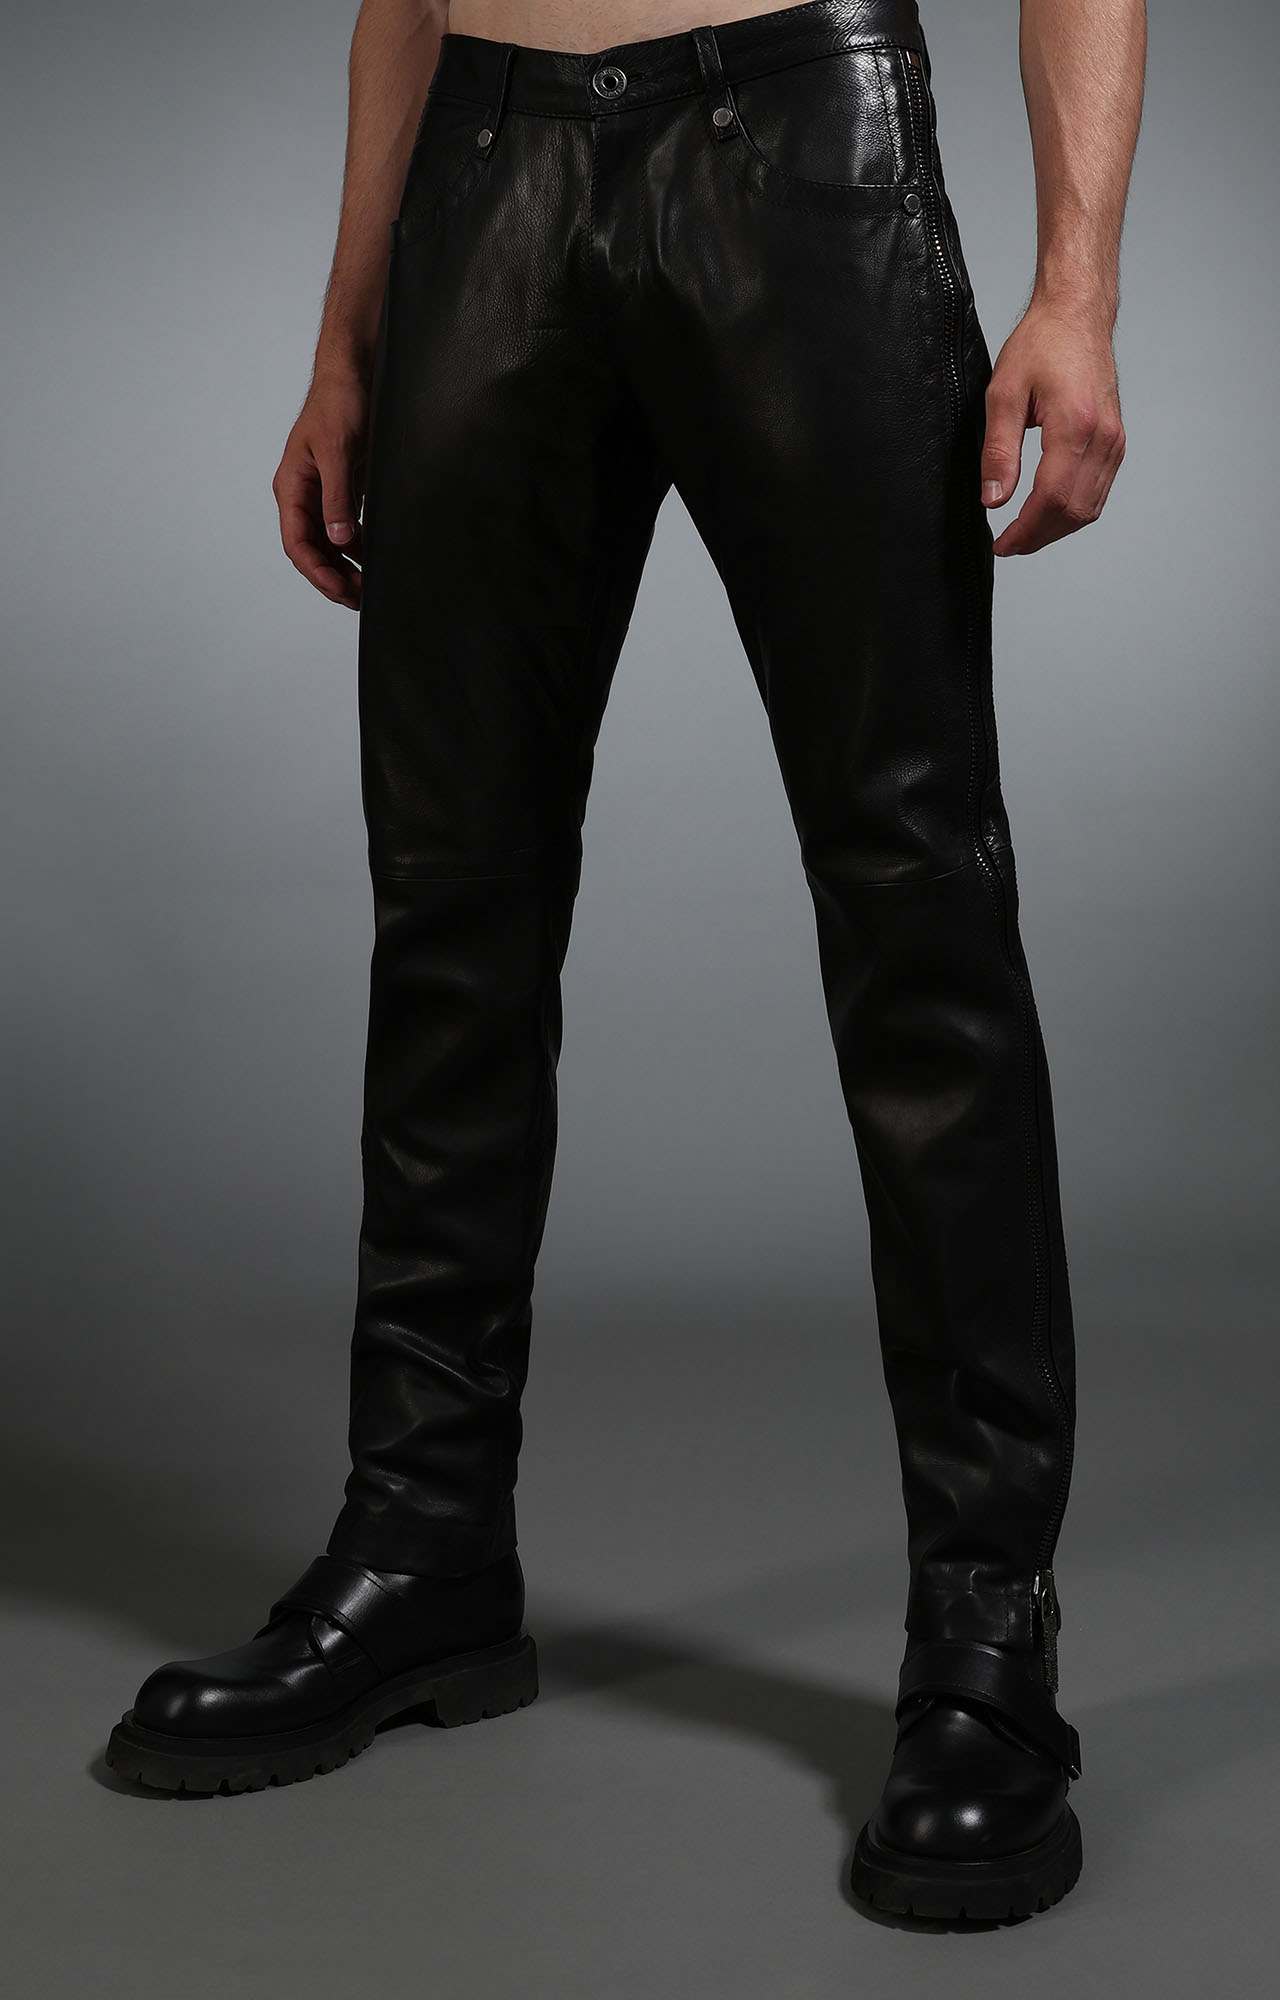 Black Men's black leather jeans | Bikkembergs